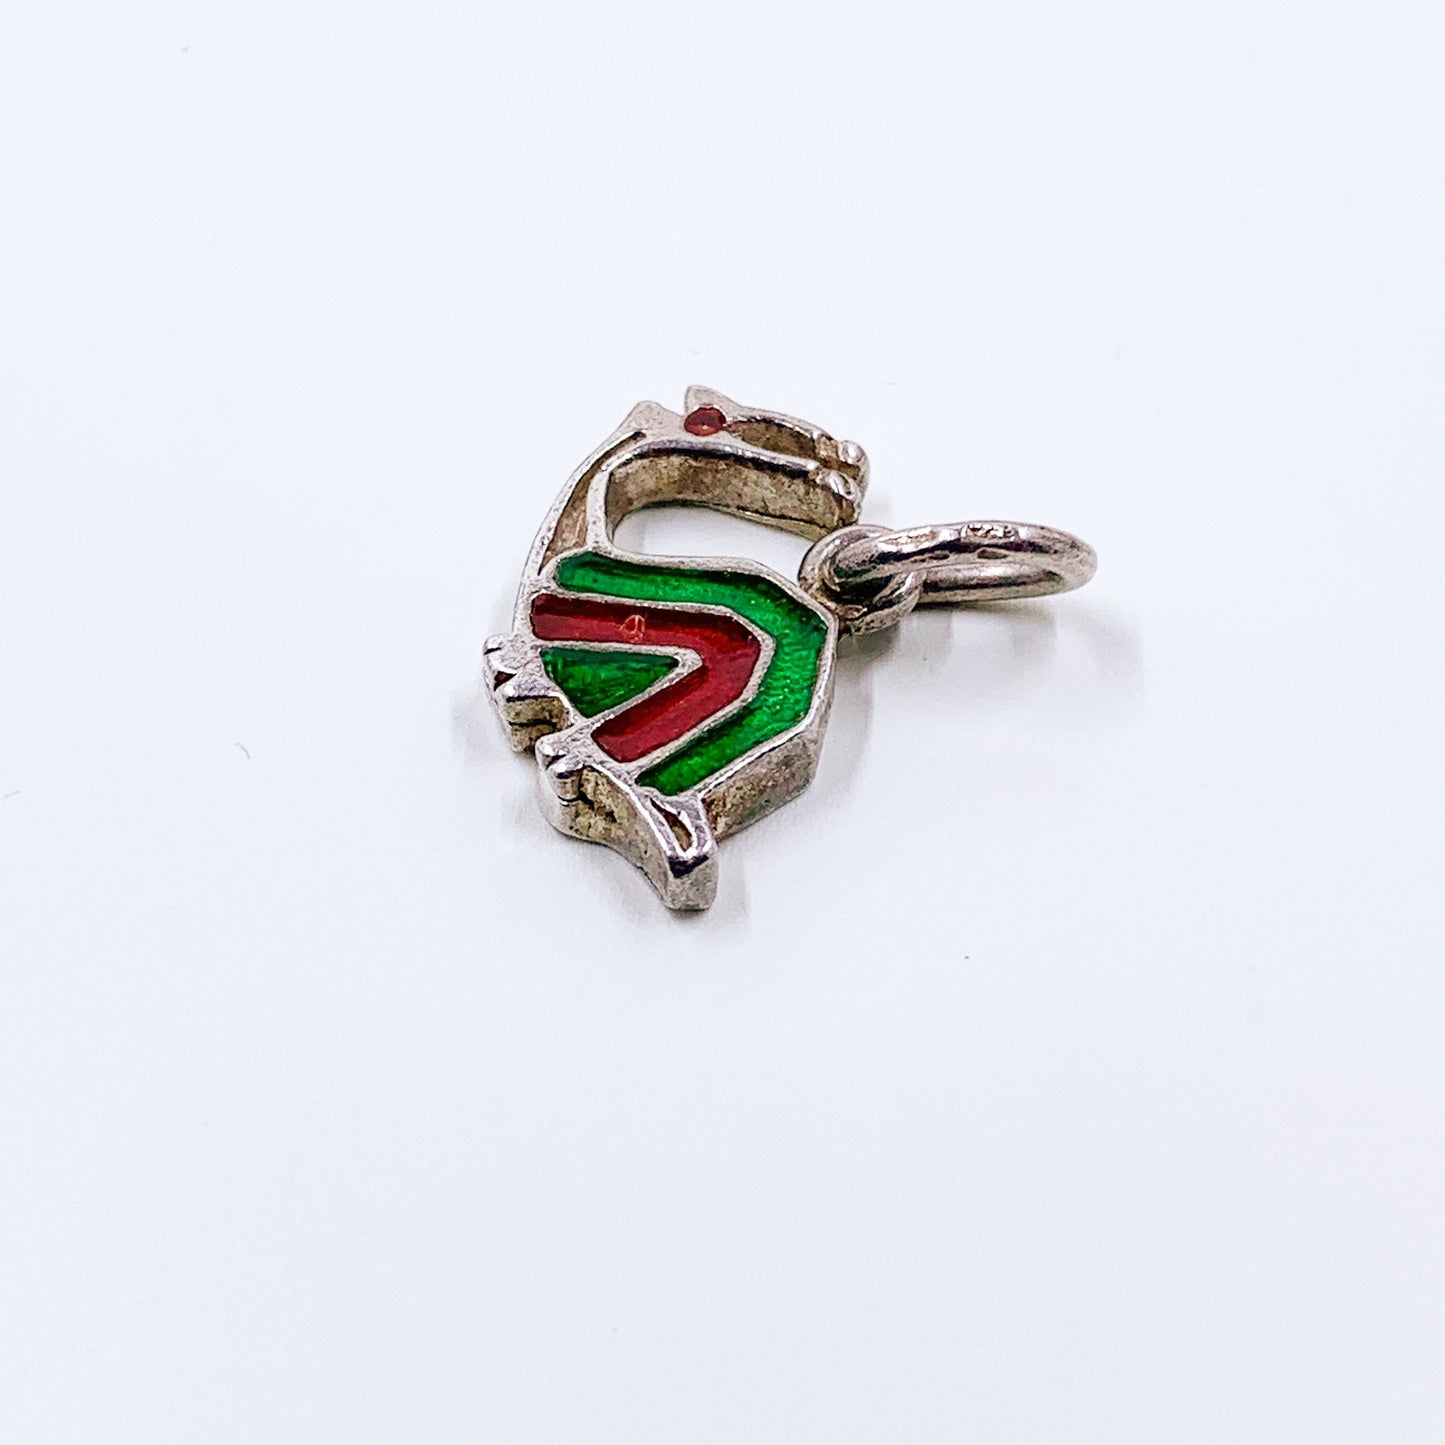 Vintage Silver Enamel Snail Charm | Green and Red Enamel Charm | Garden Snail